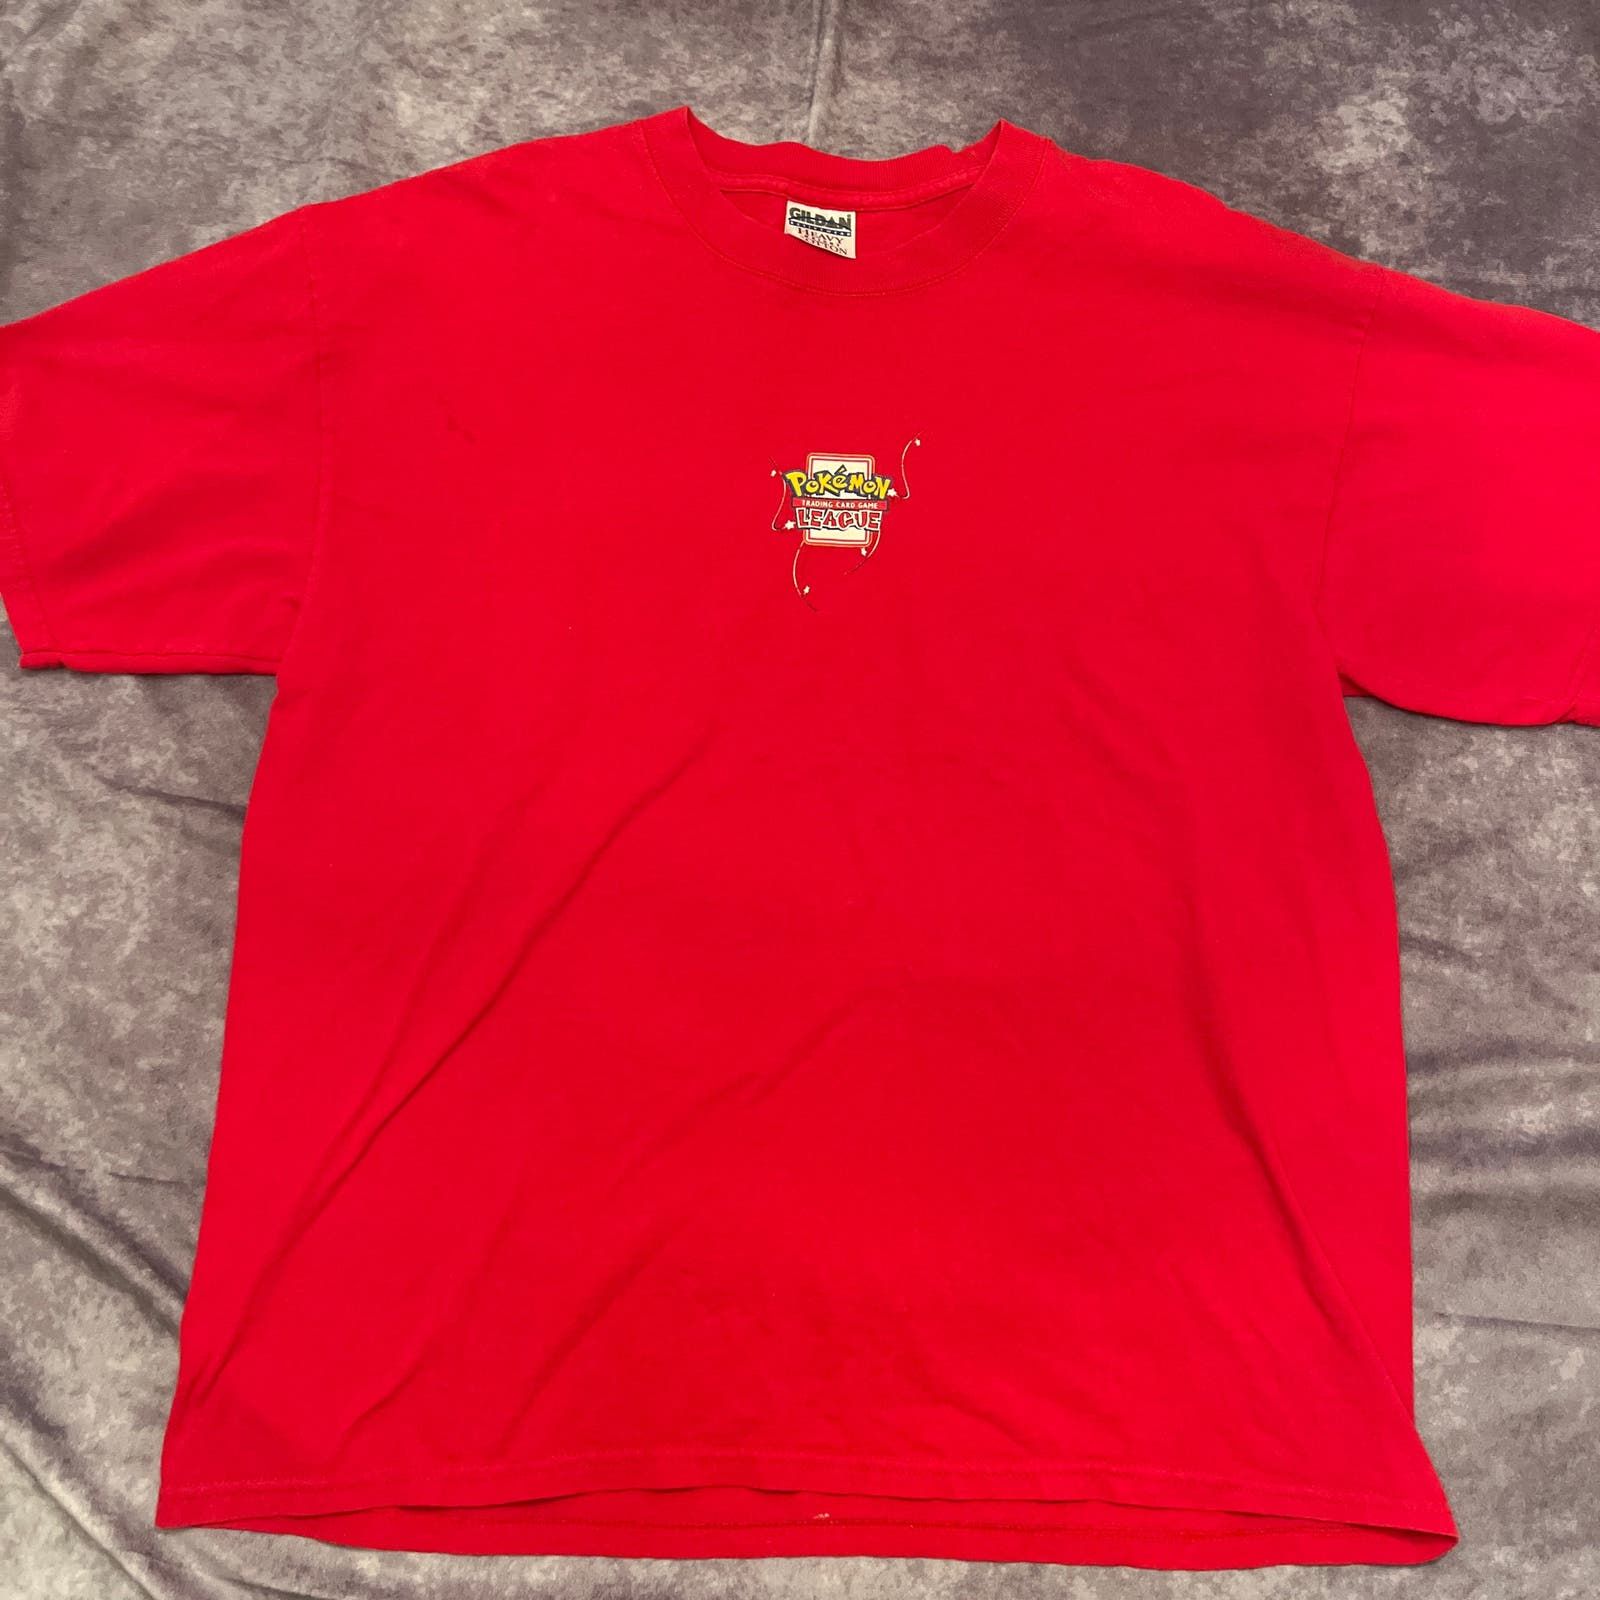 Gildan Vintage Pokémon “Gym Leader” T-Shirt Size US XL / EU 56 / 4 - 1 Preview